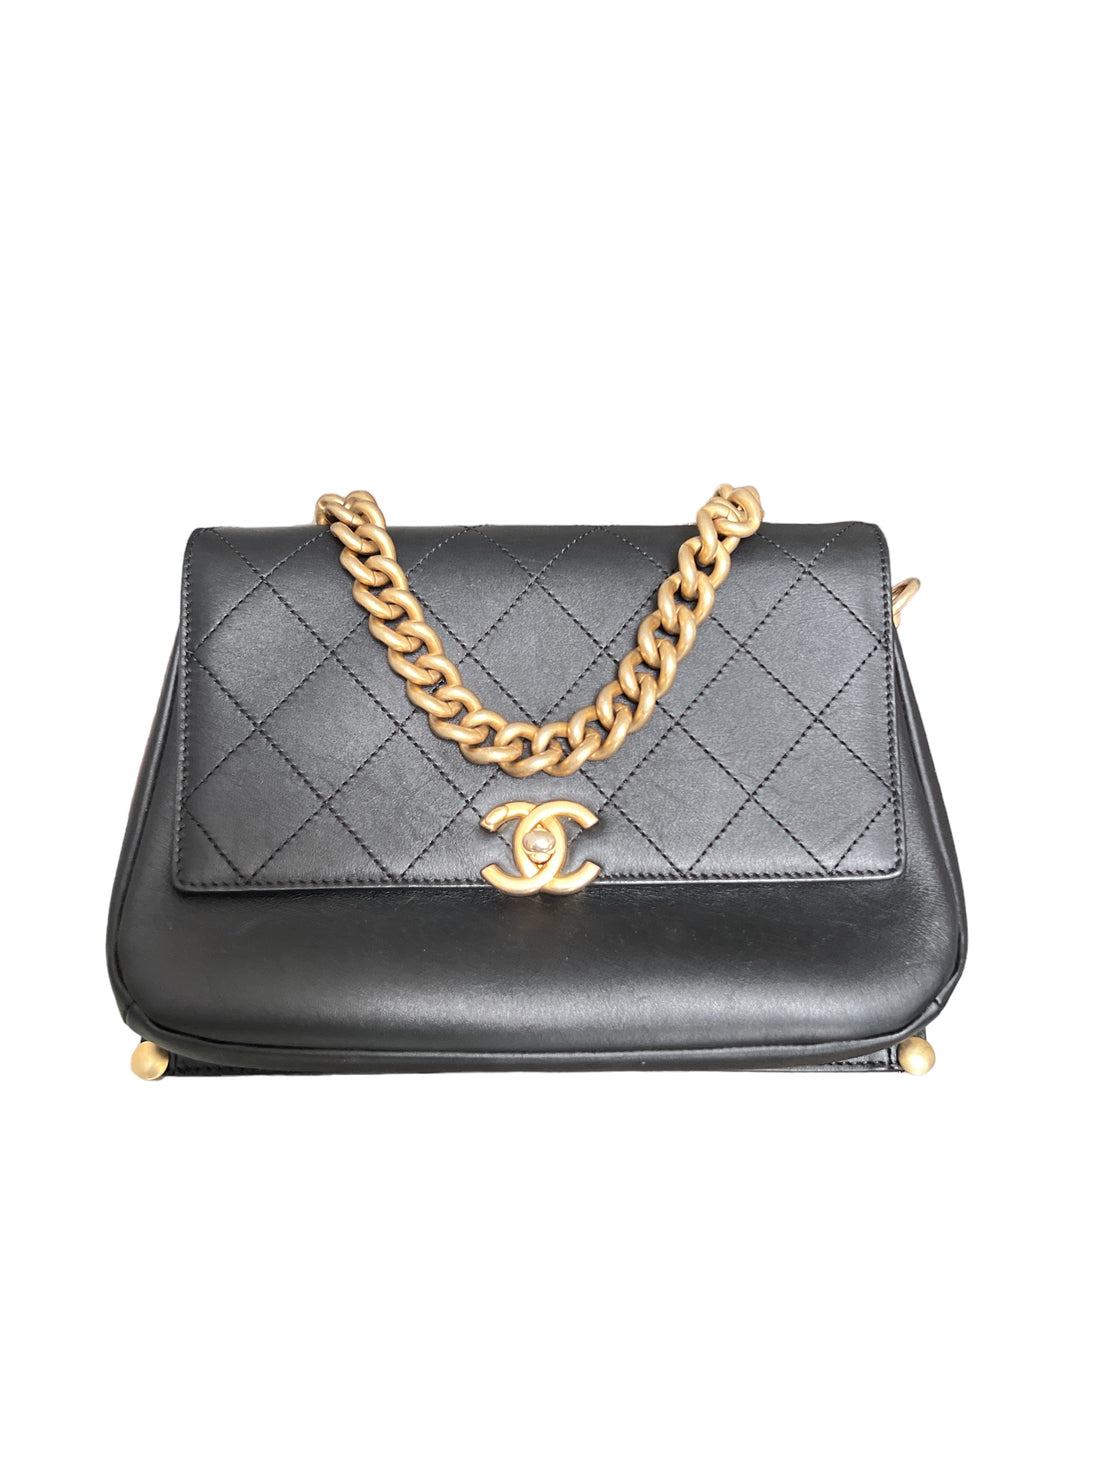 Chanel Classic Flap Bag aus schwarzem Kalbsleder